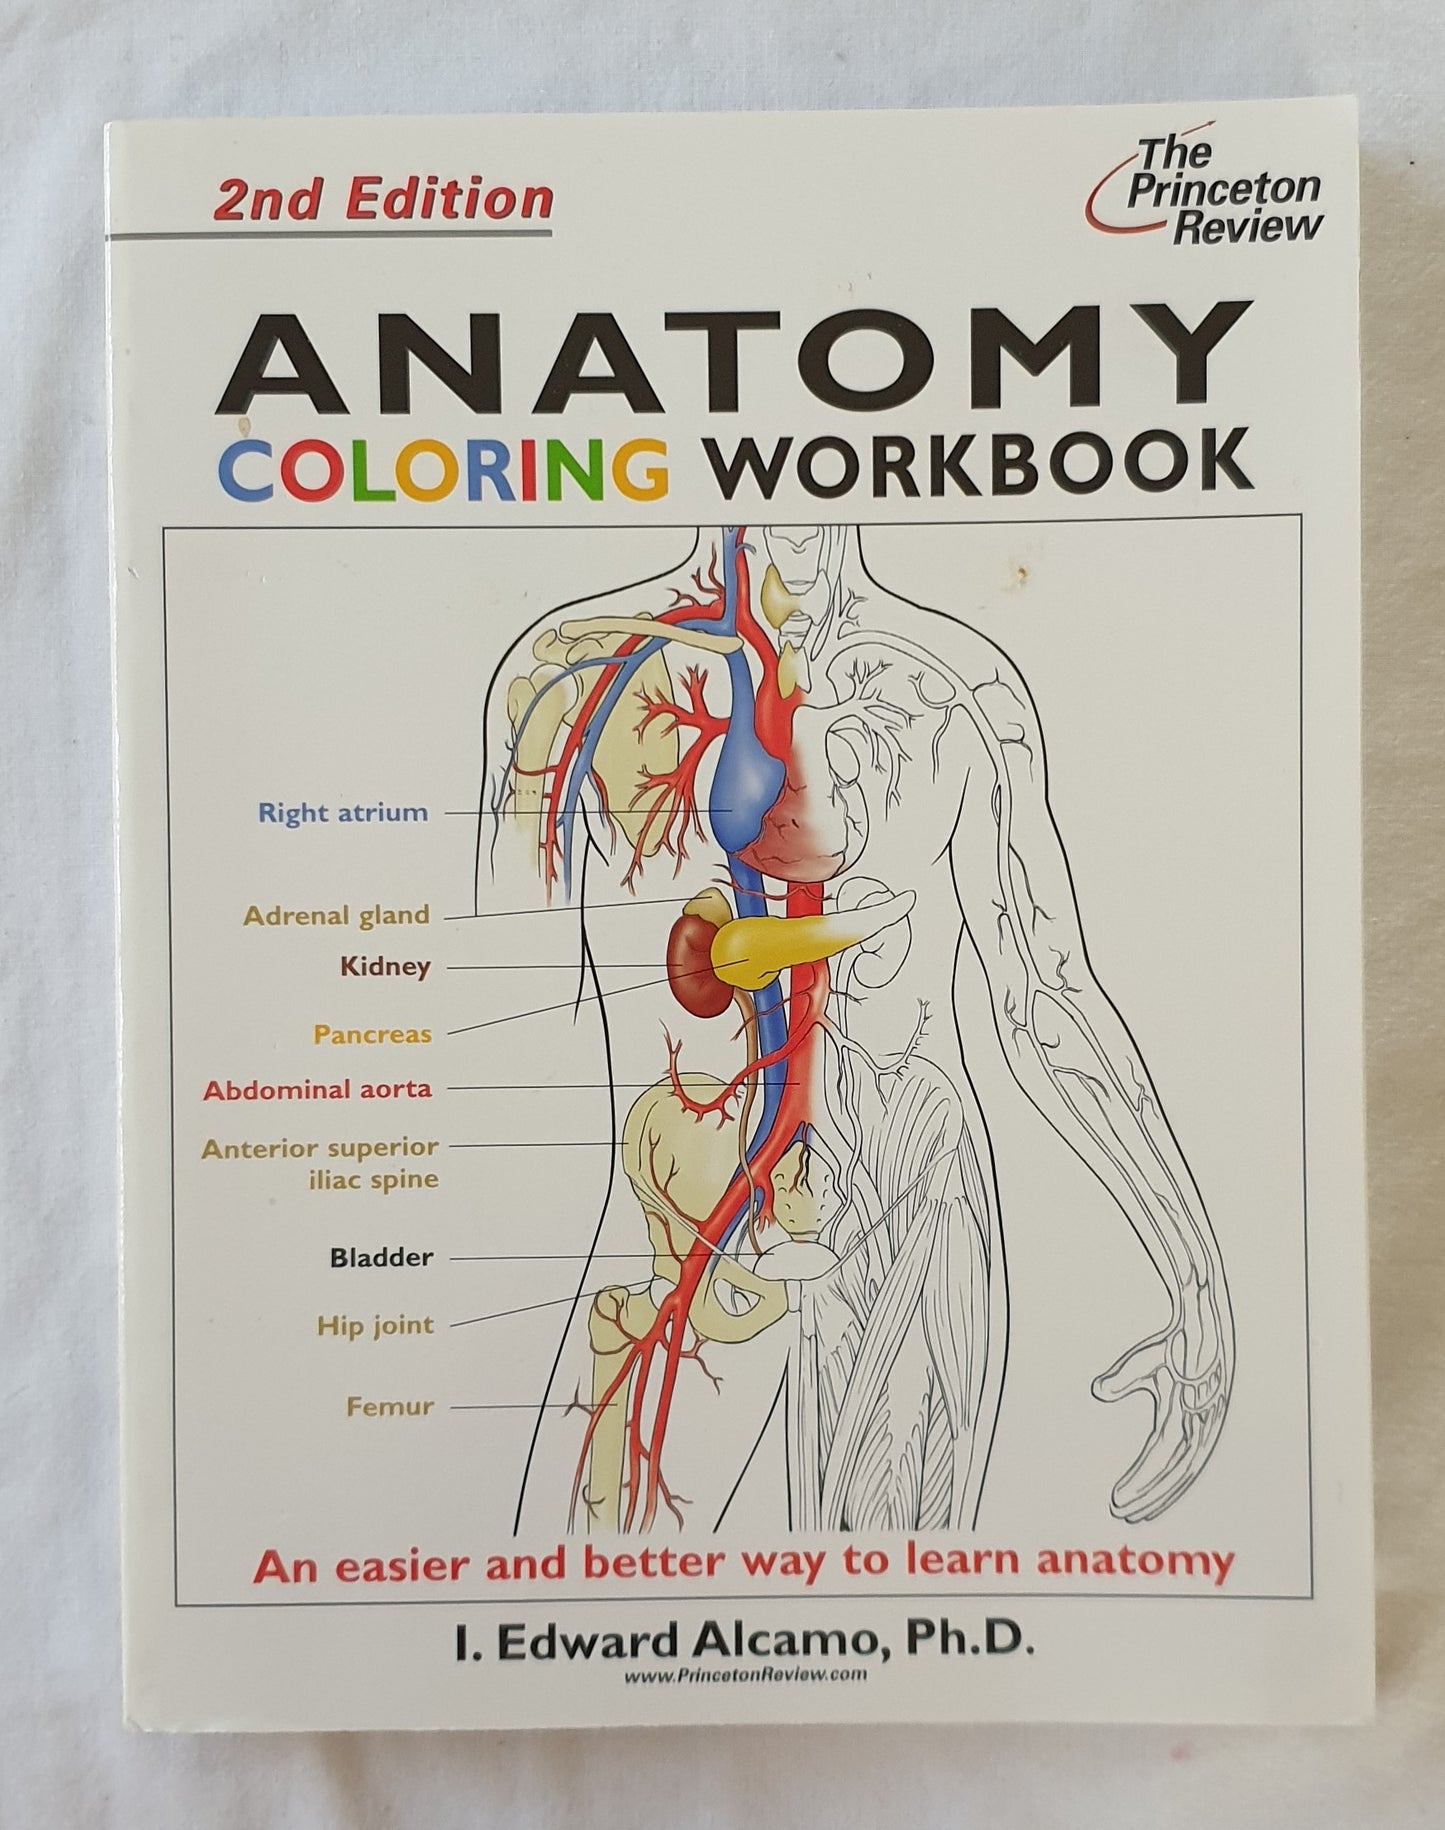 Anatomy Coloring Workbook  An easier way to learn anatomy  by I. Edward Alcamo